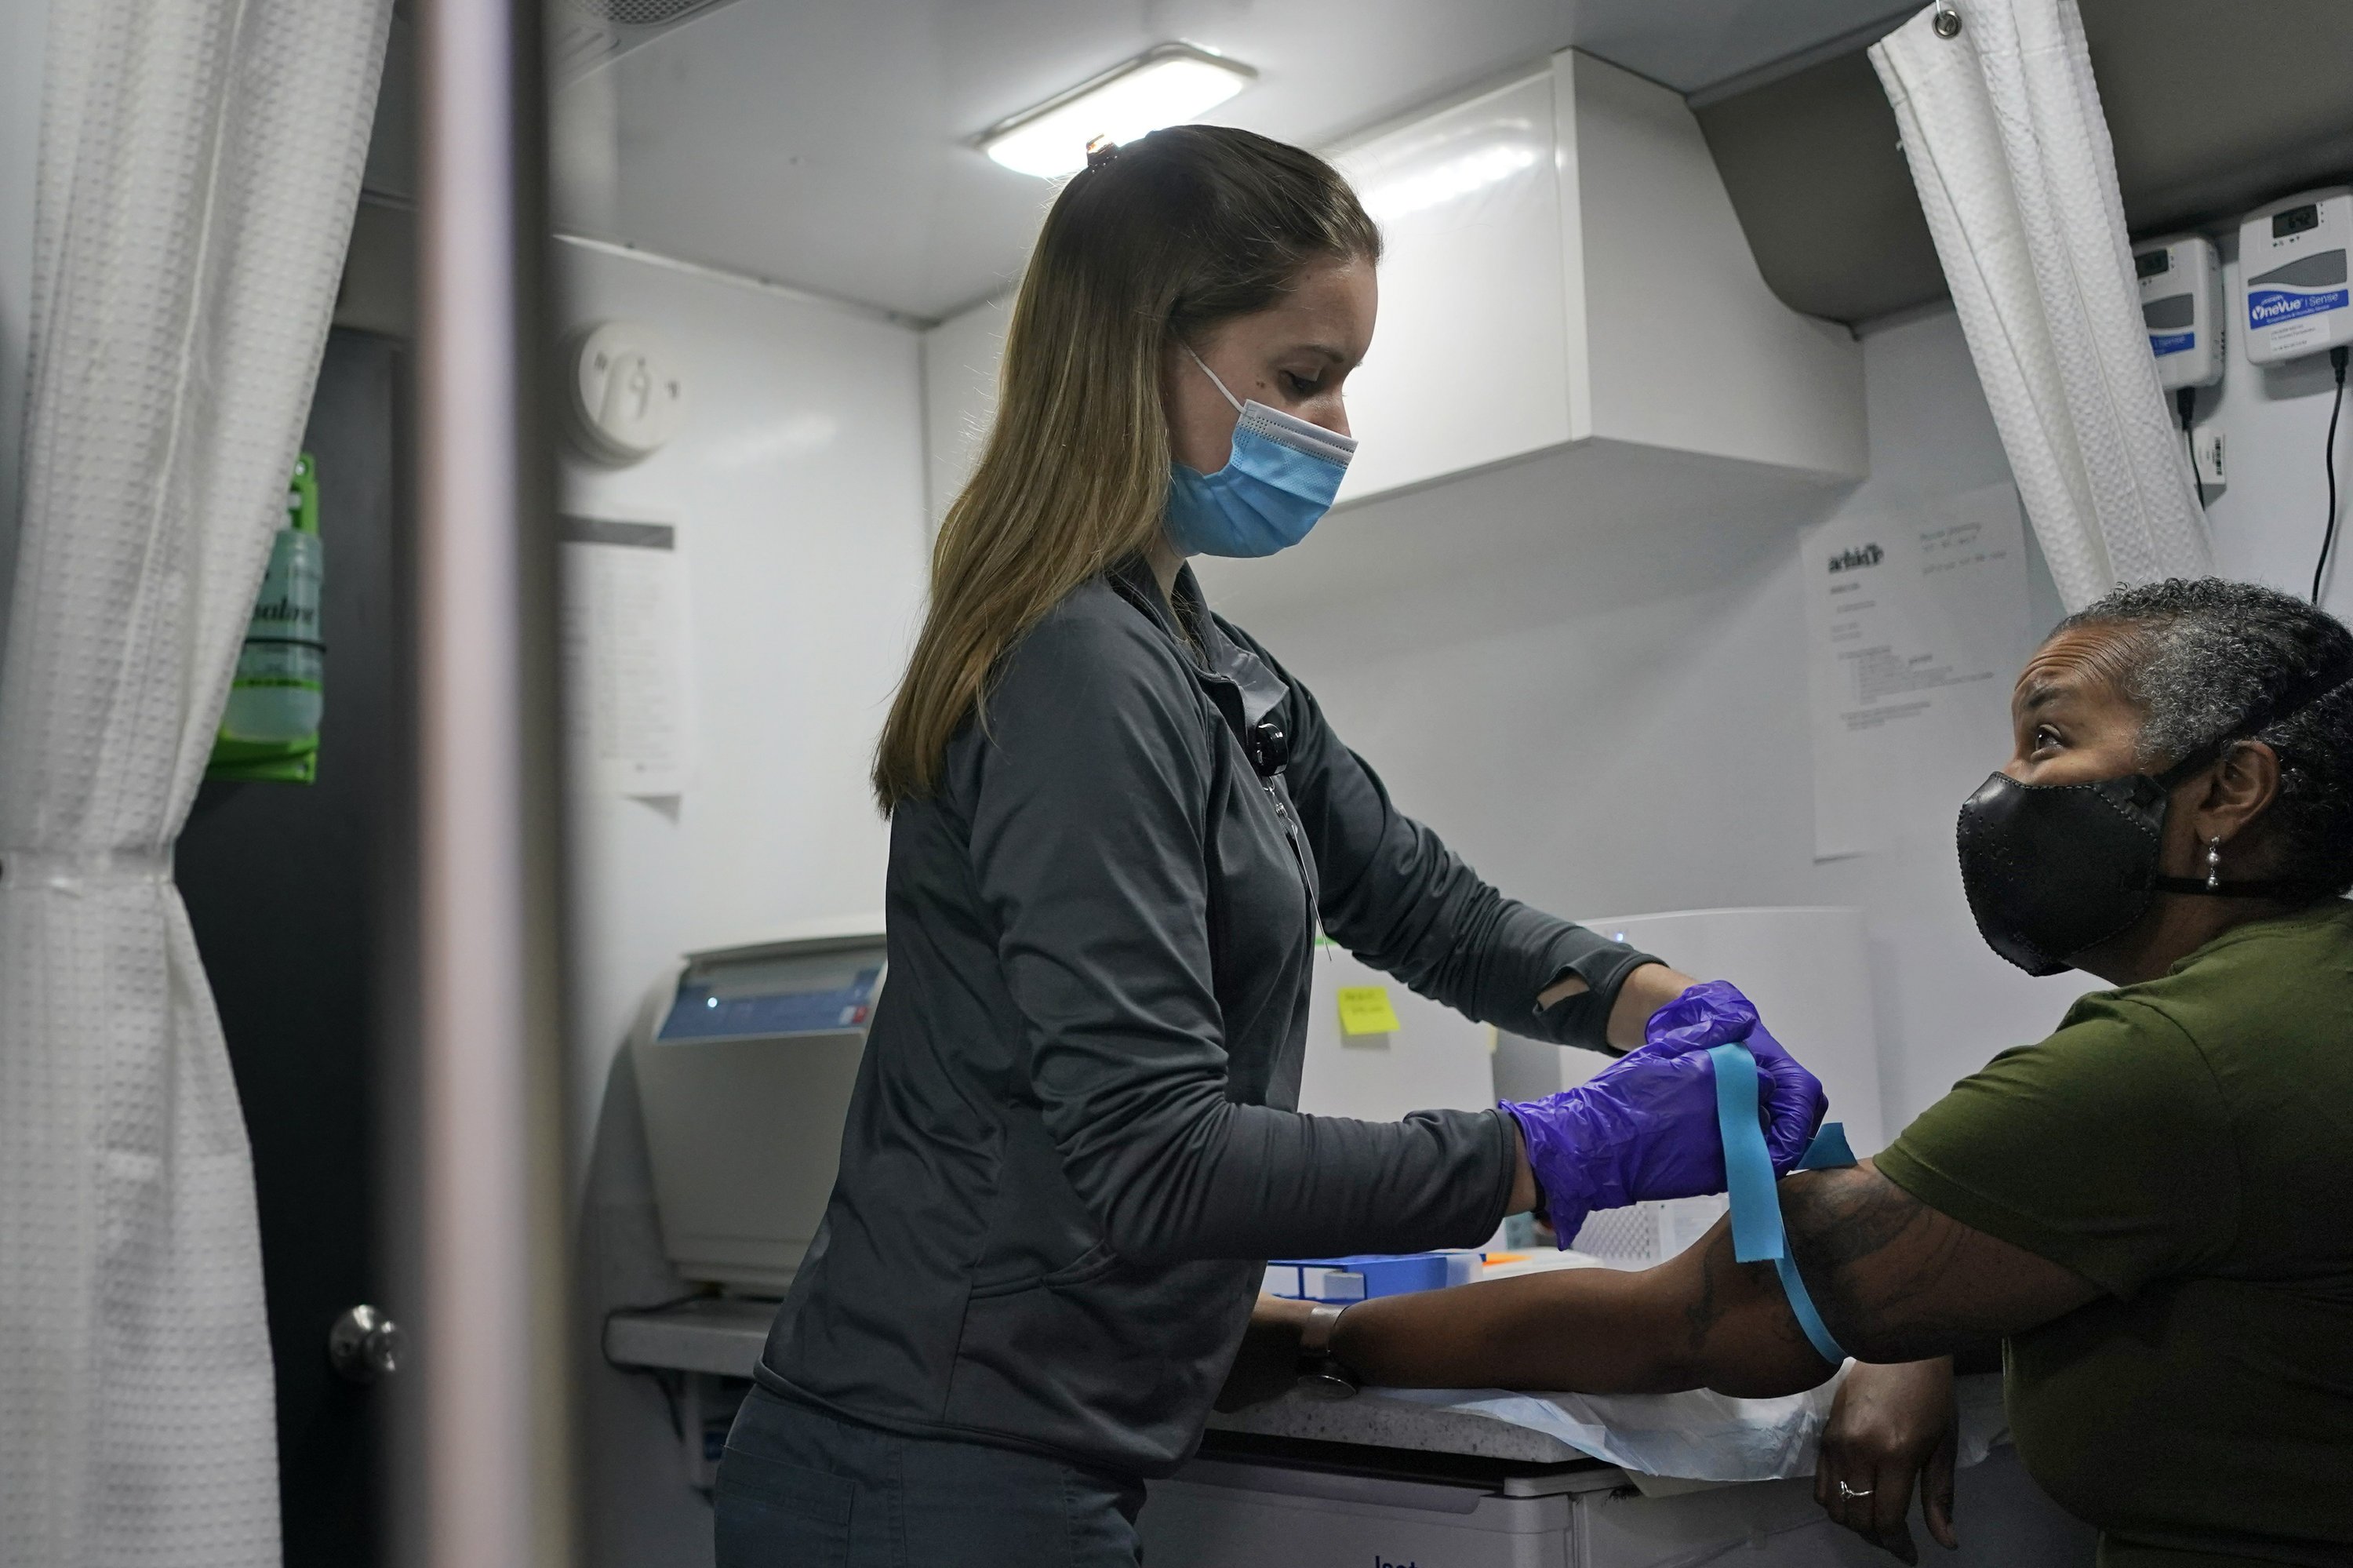 Mobile labs conduct vaccine studies in different neighborhoods